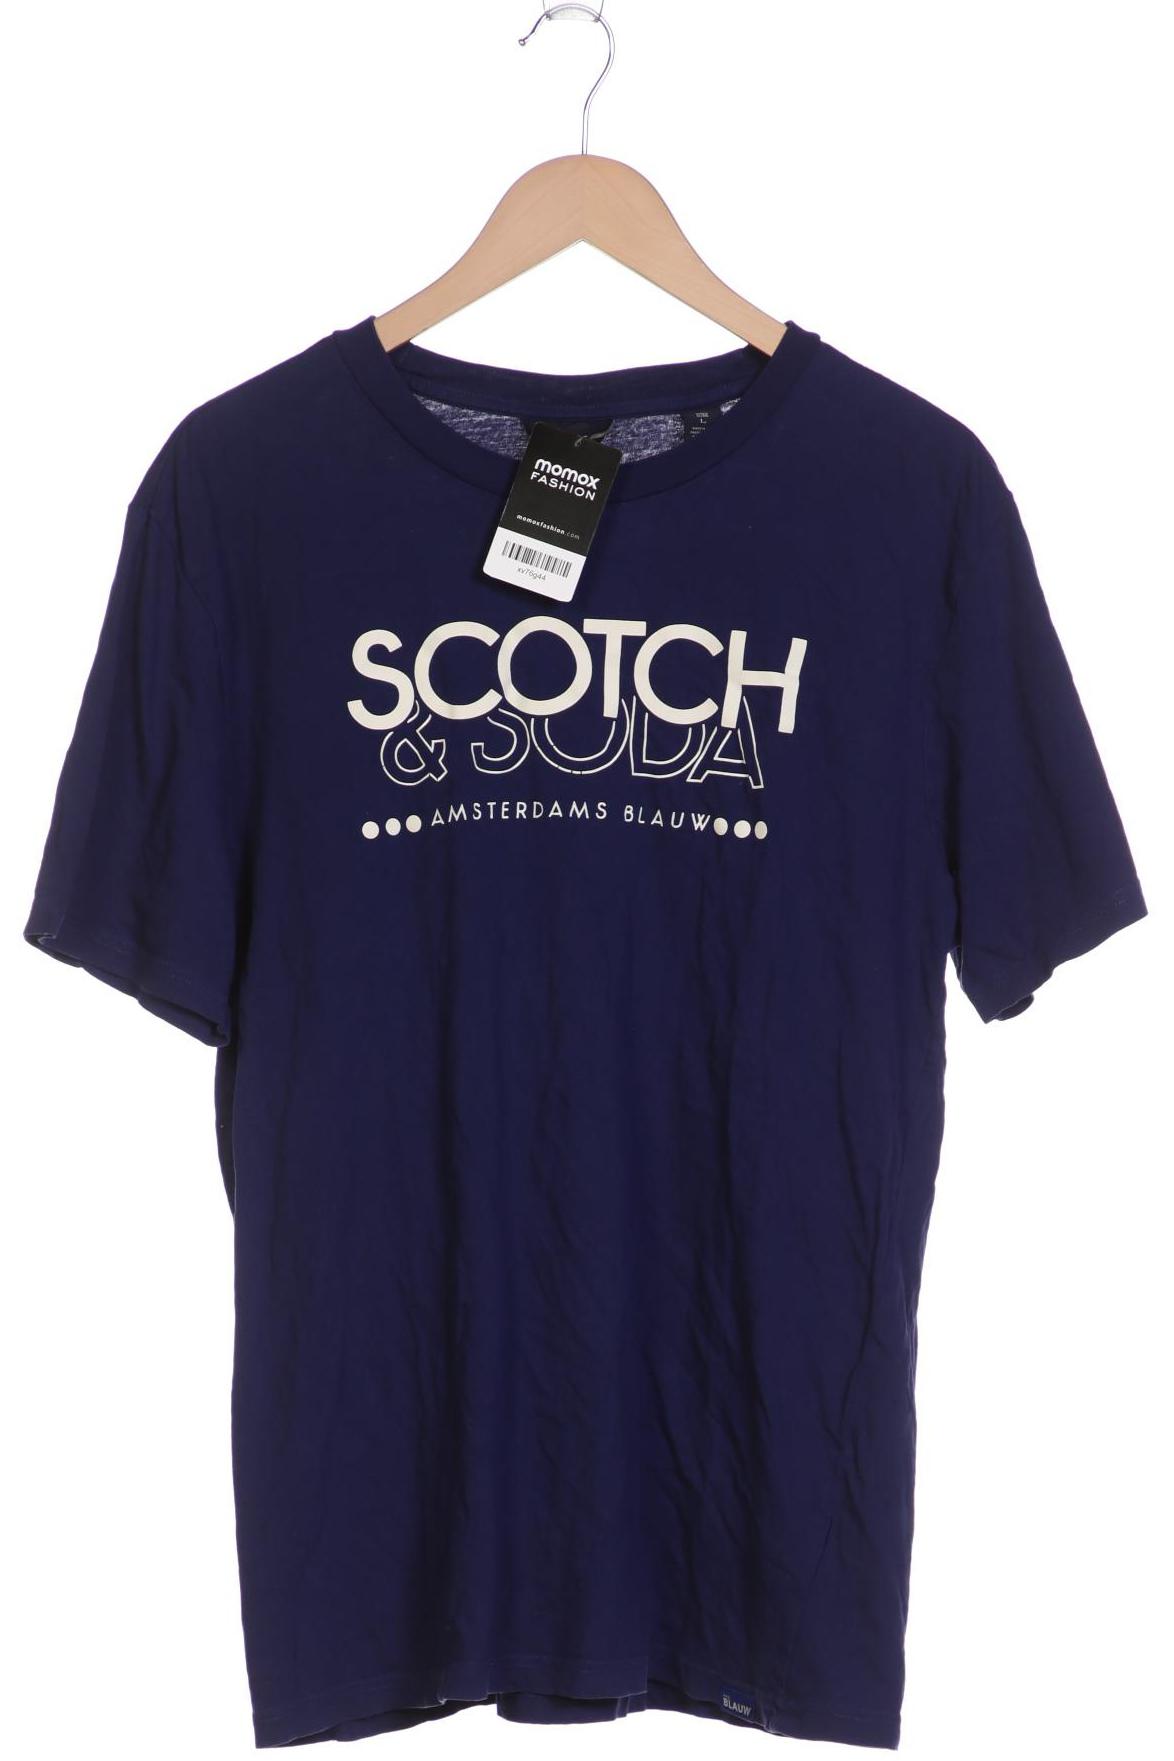 Scotch & Soda Herren T-Shirt, blau von Scotch & Soda